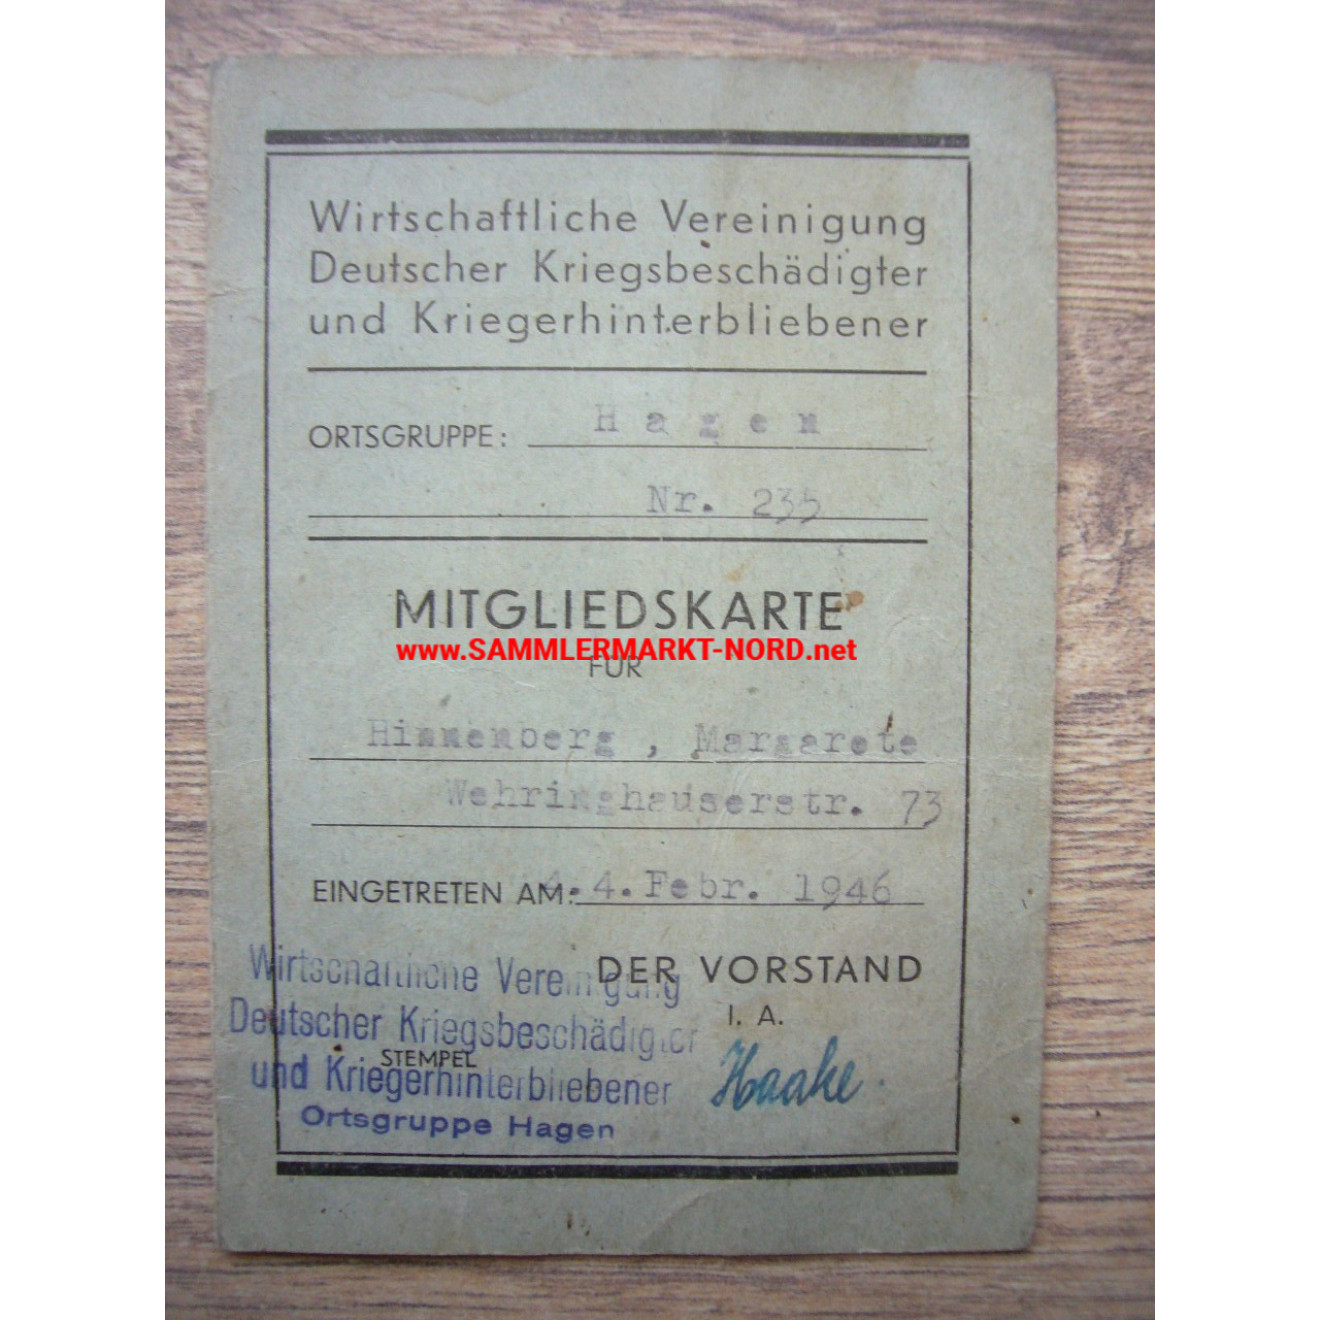 Economic association of German war invalids and war survivors - membership card